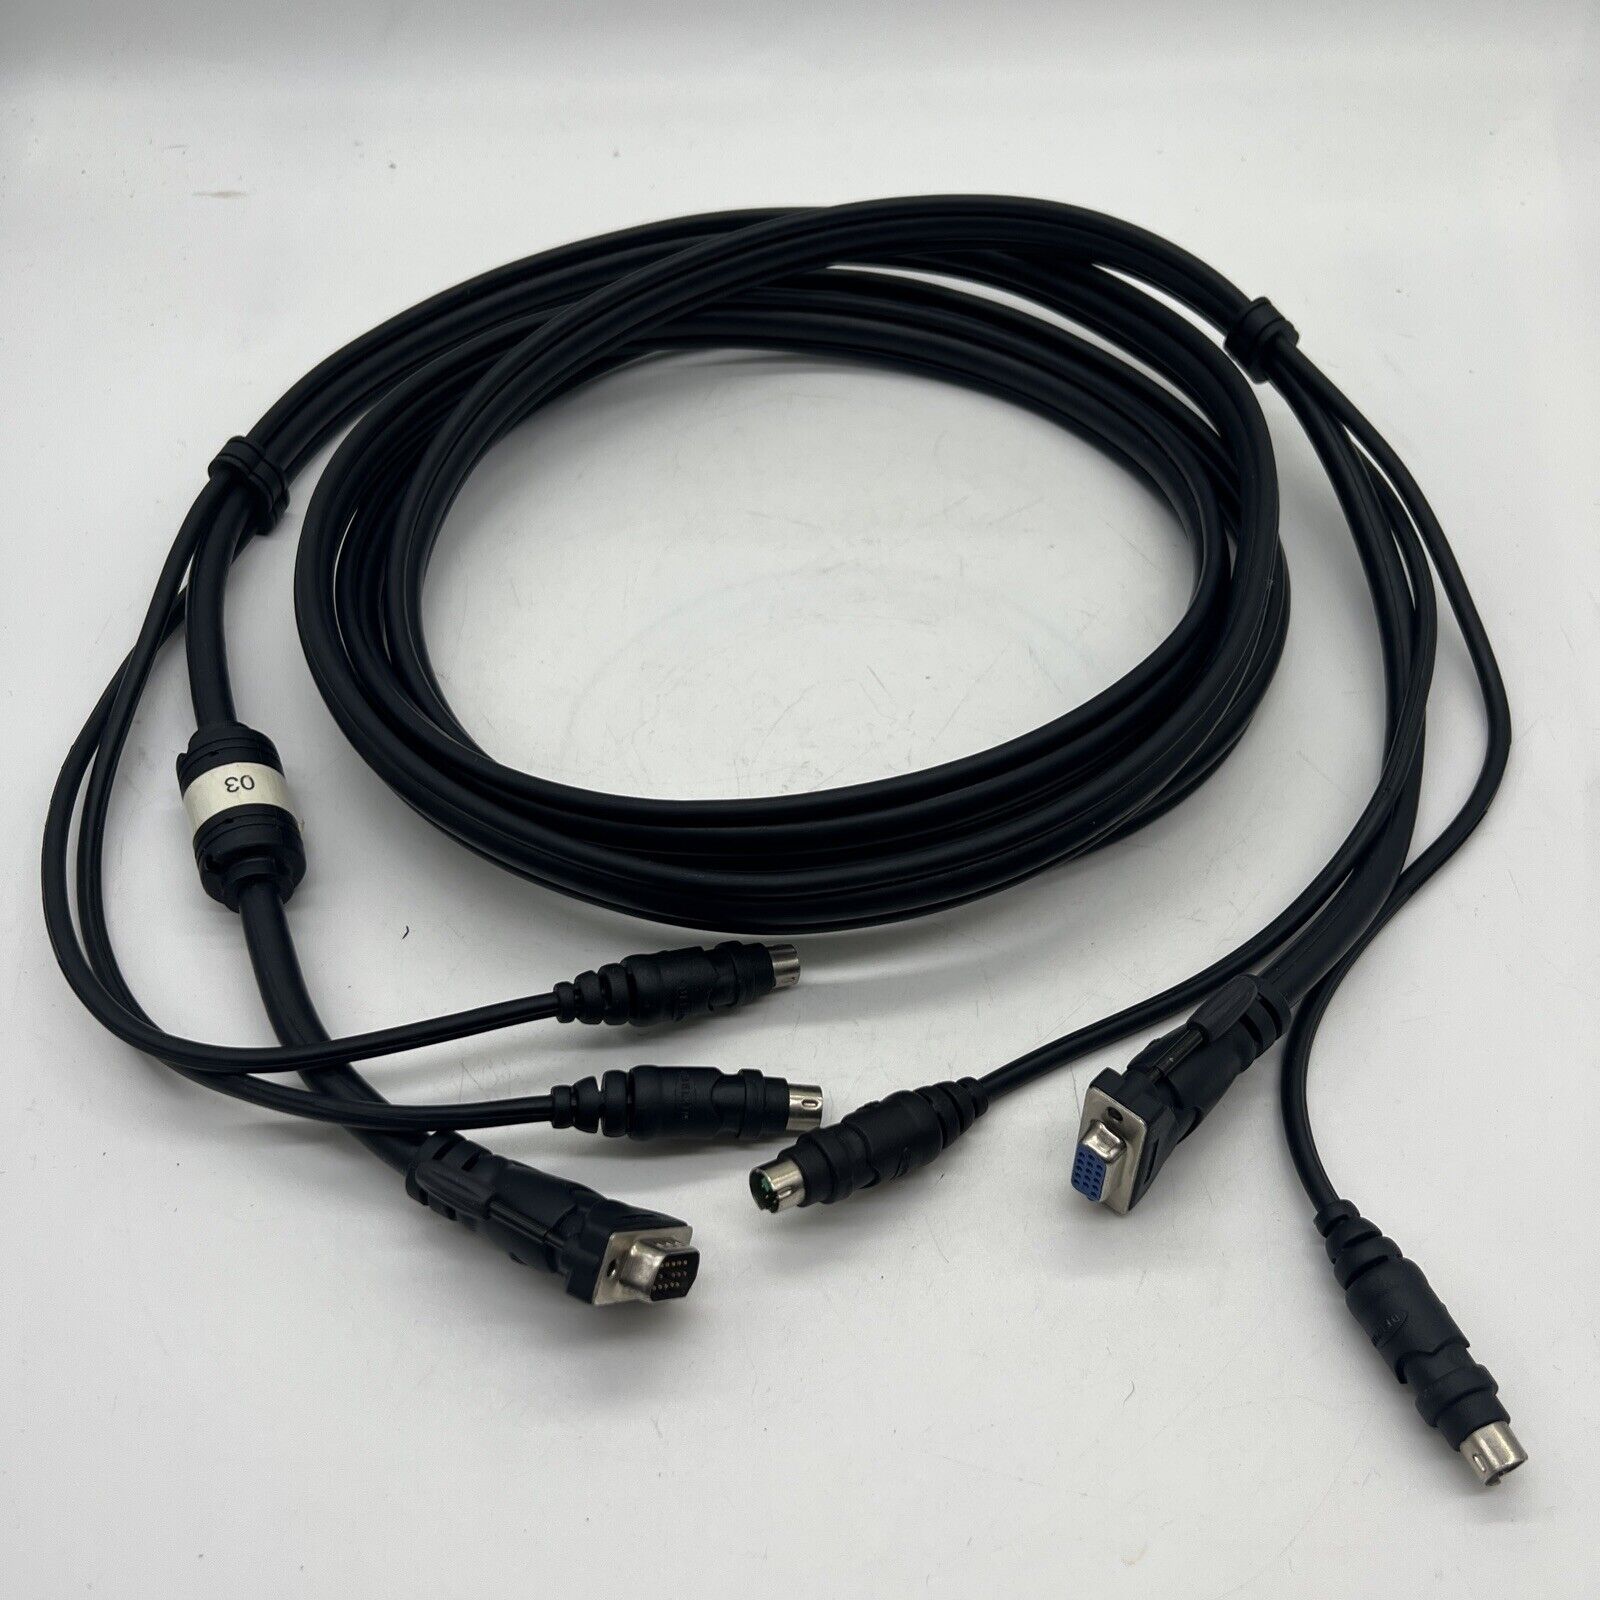 Belkin Enterprise Series Cable For Optimum Data Transfer 8 Ft